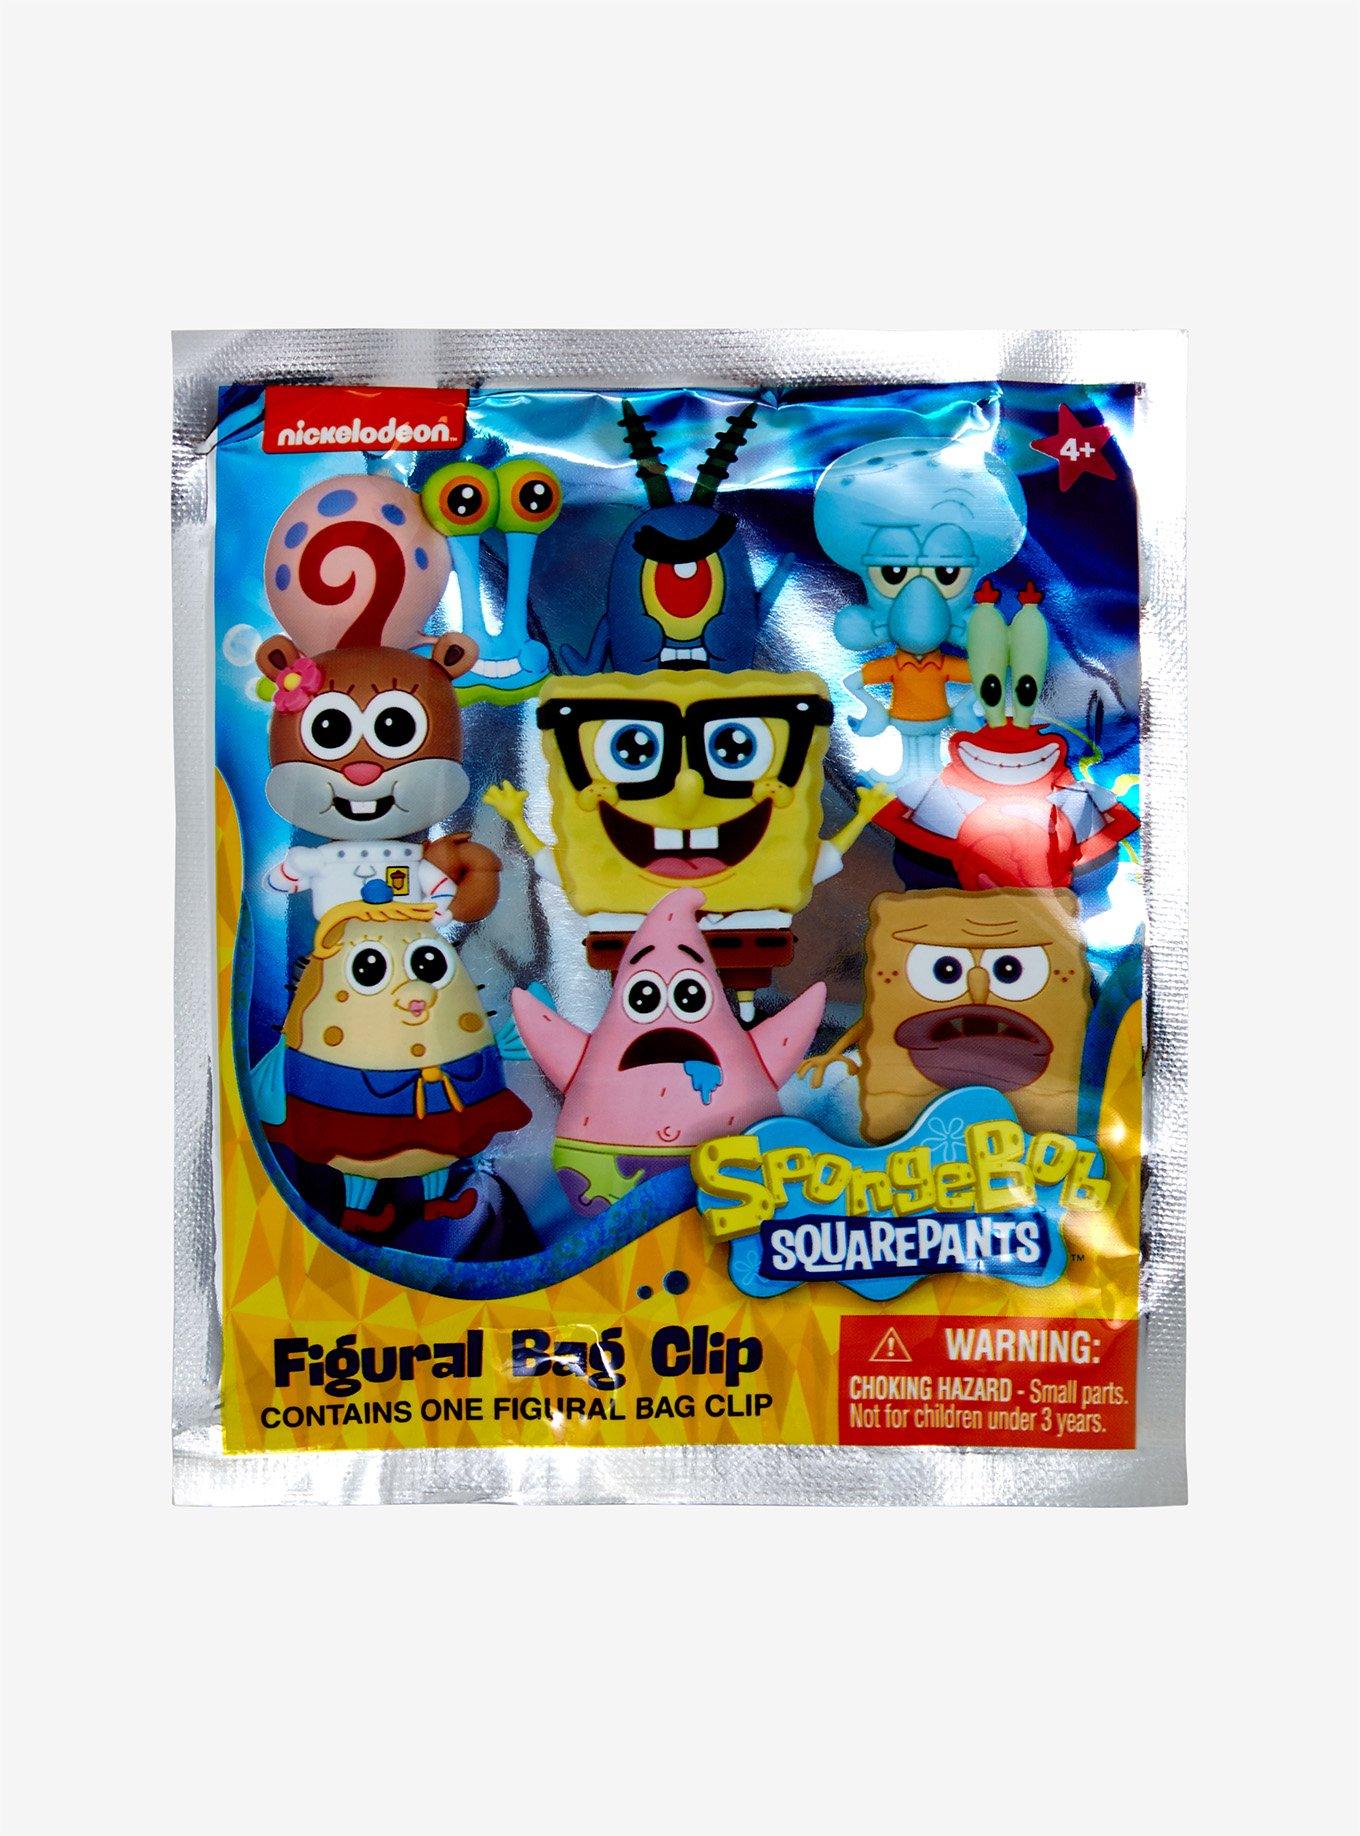 Spongebob Blind Bags Party Favors Bundle ~ 3 Pack Spongebob Keychain  Mystery Figures Plus Tattoos | Spongebob Squarepants Bag Clips for Kids